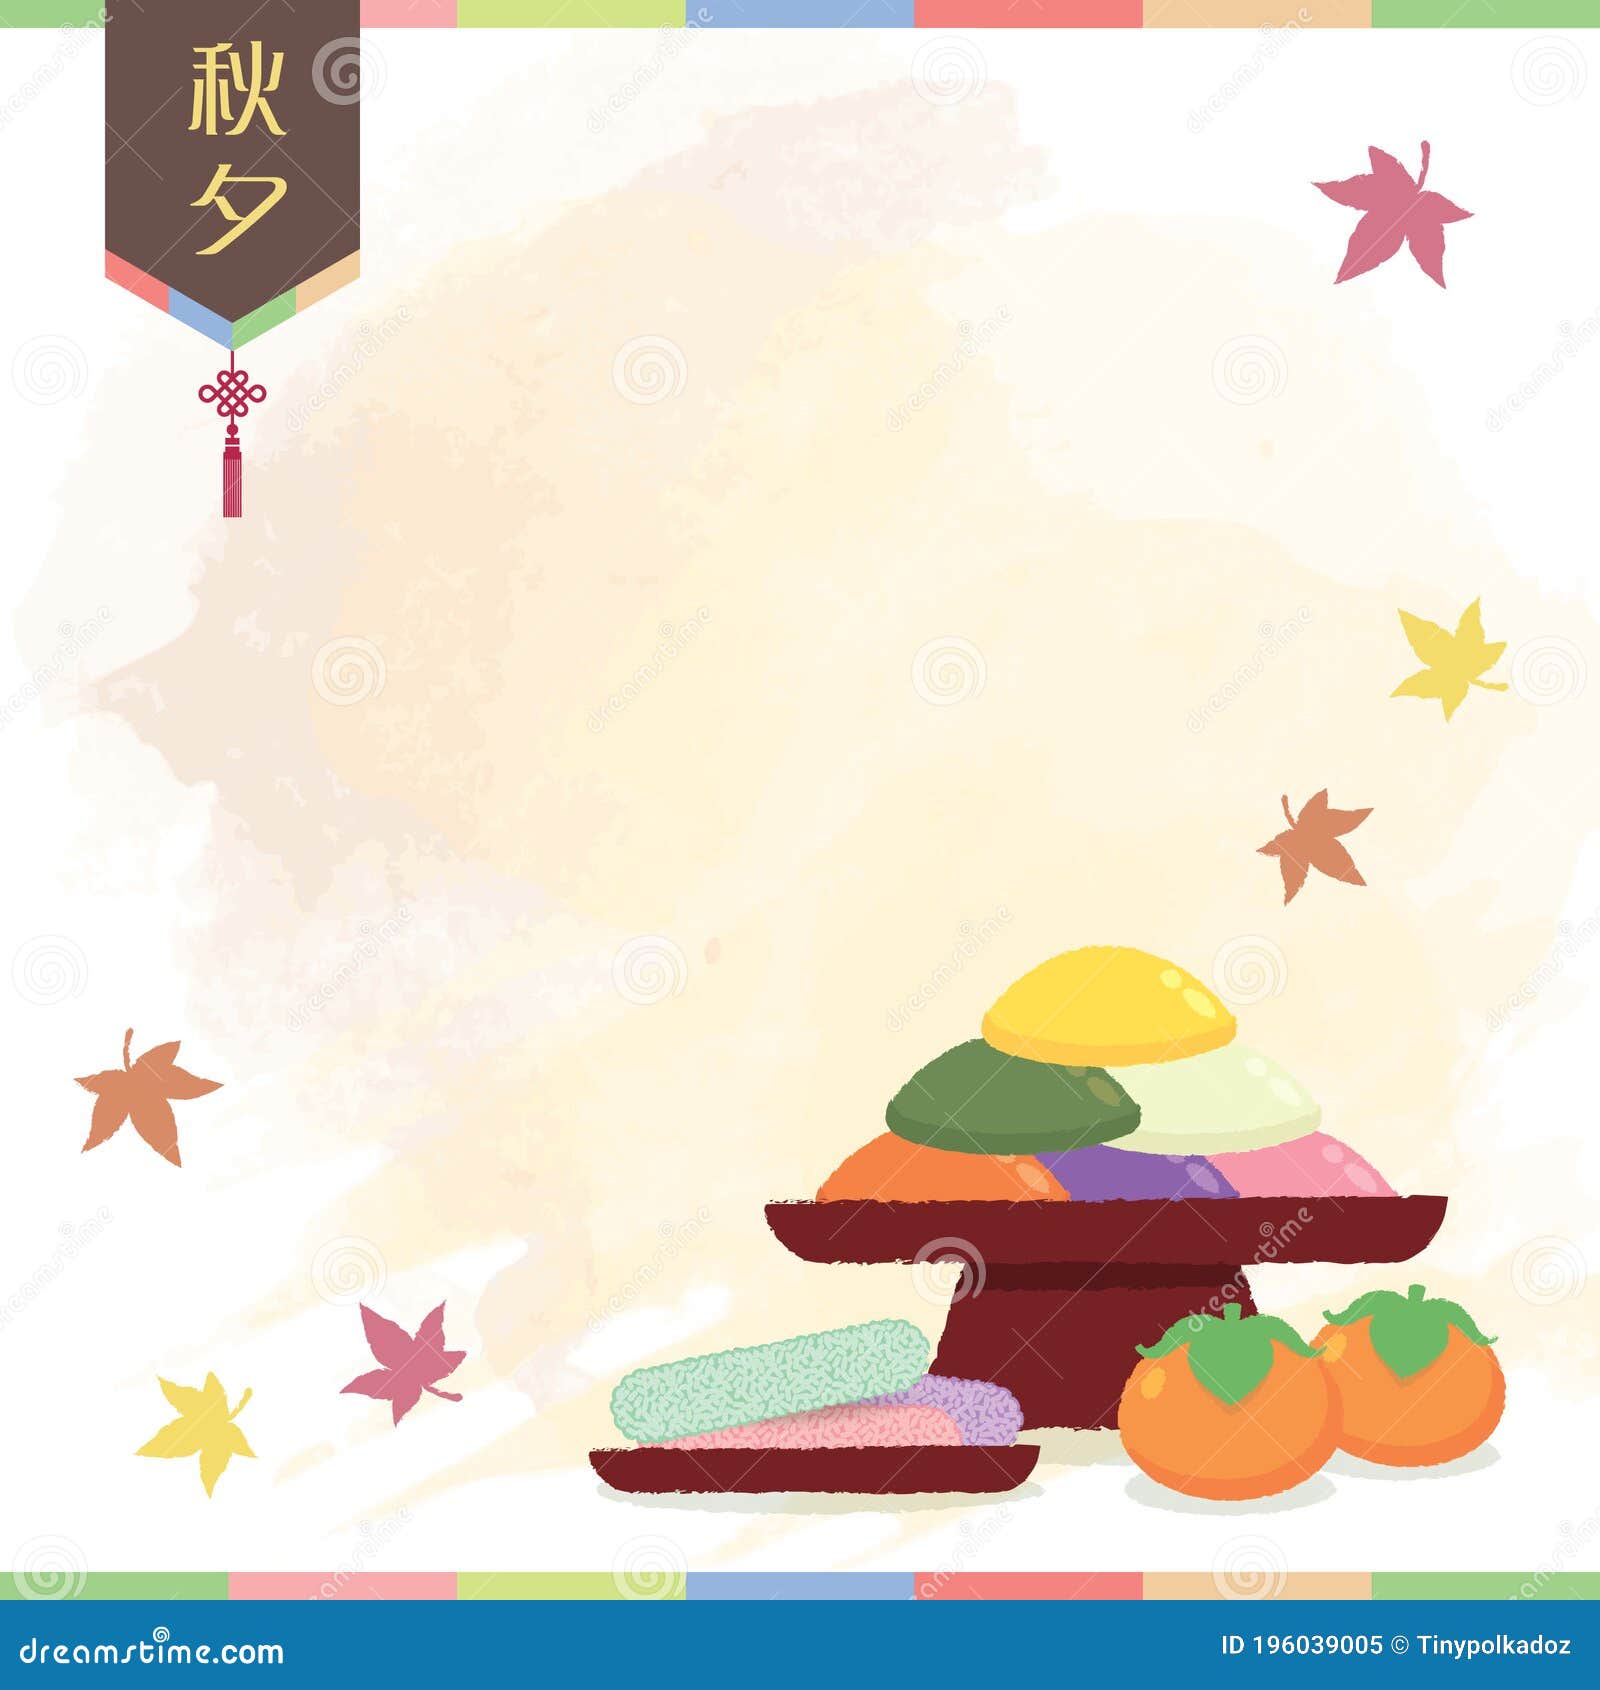 chuseok korean thanksgiving day - chuseok food: persimmons, hangwa & songpyeon